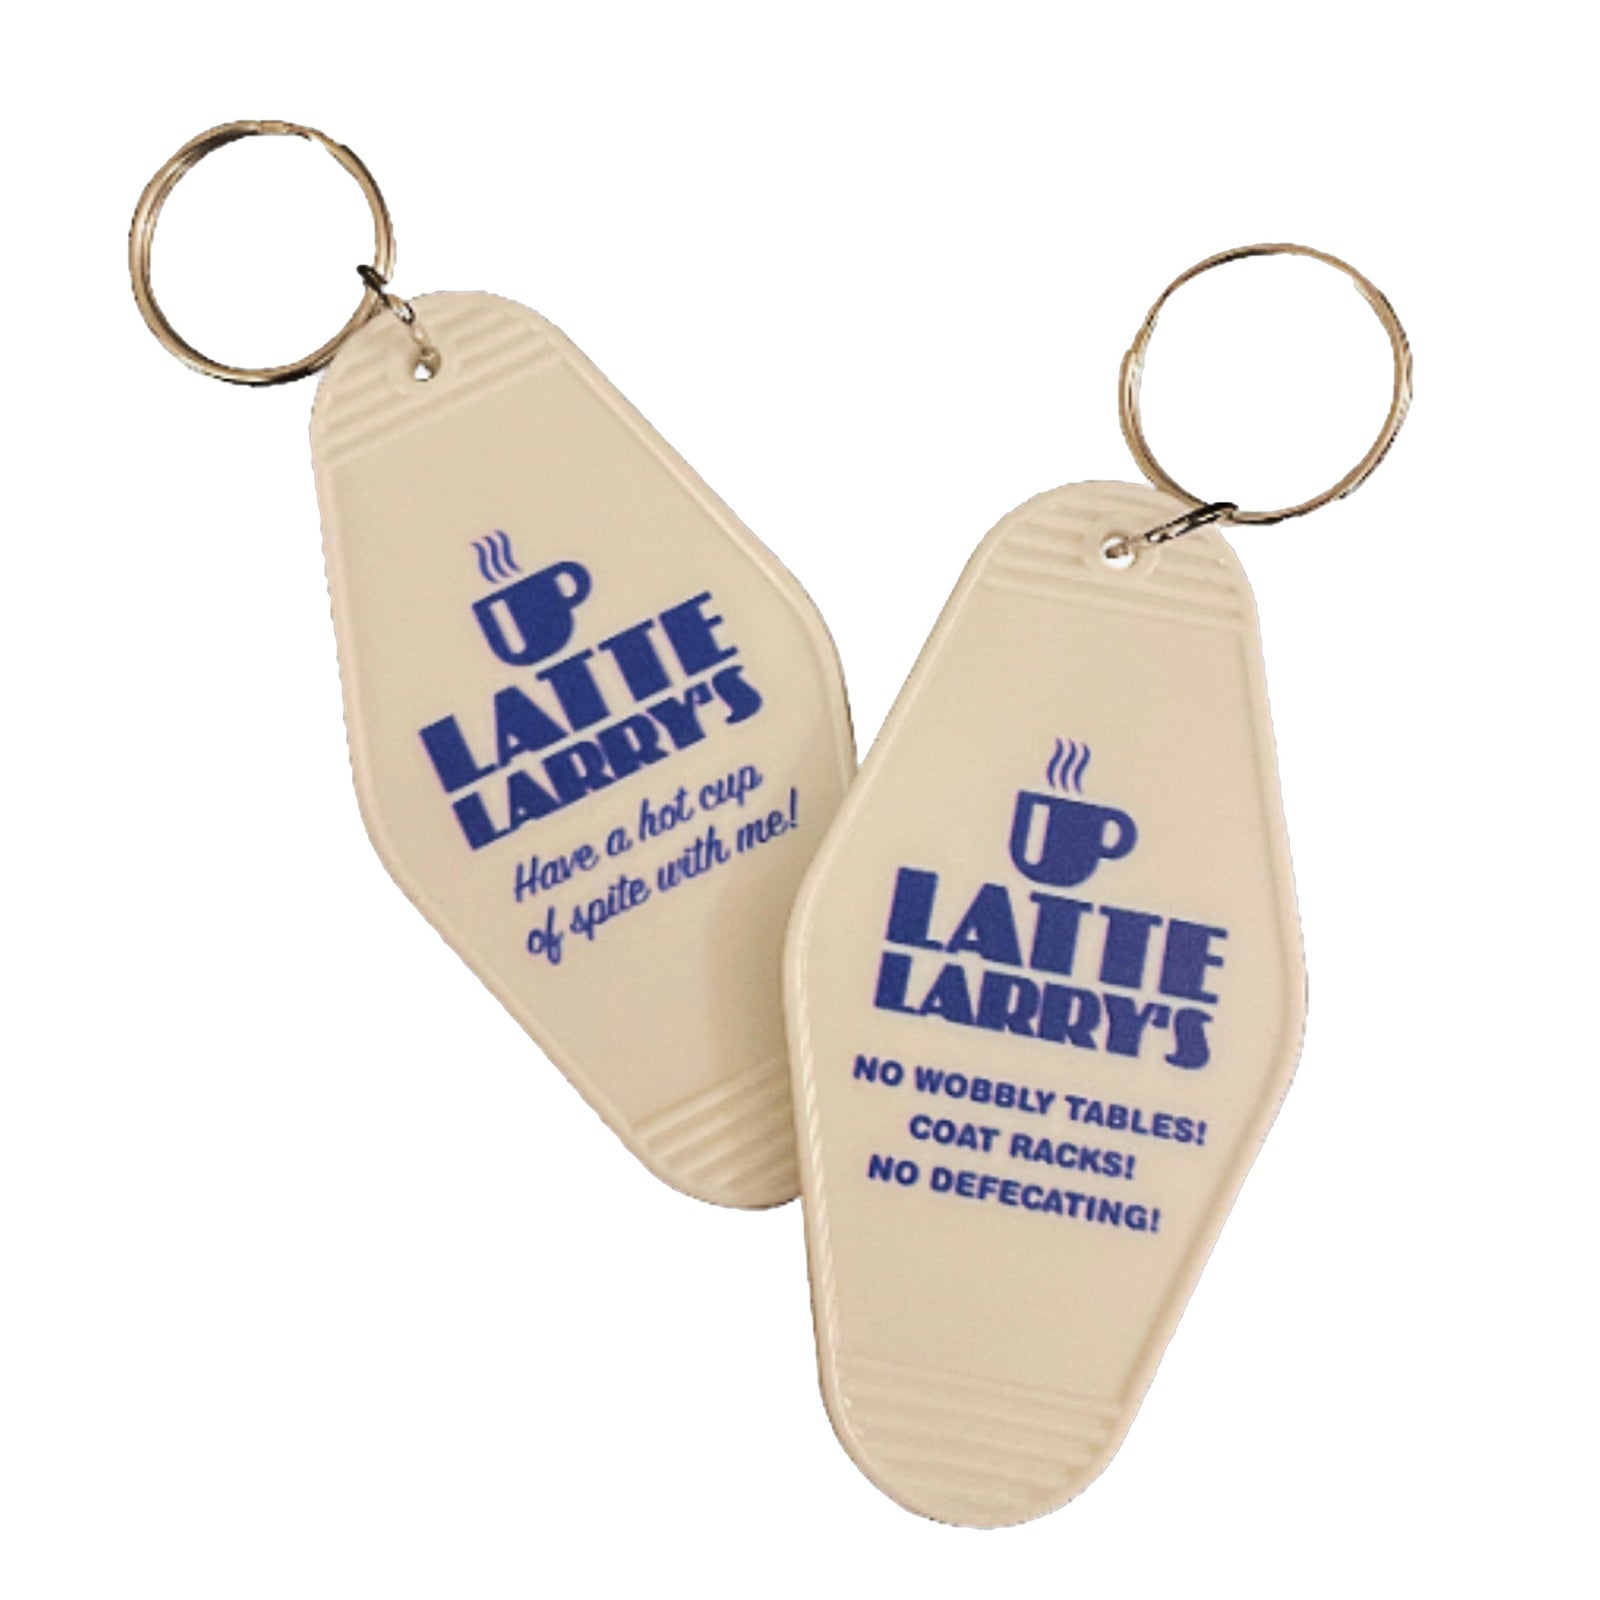 Latte Larry's Keychain - [aka]